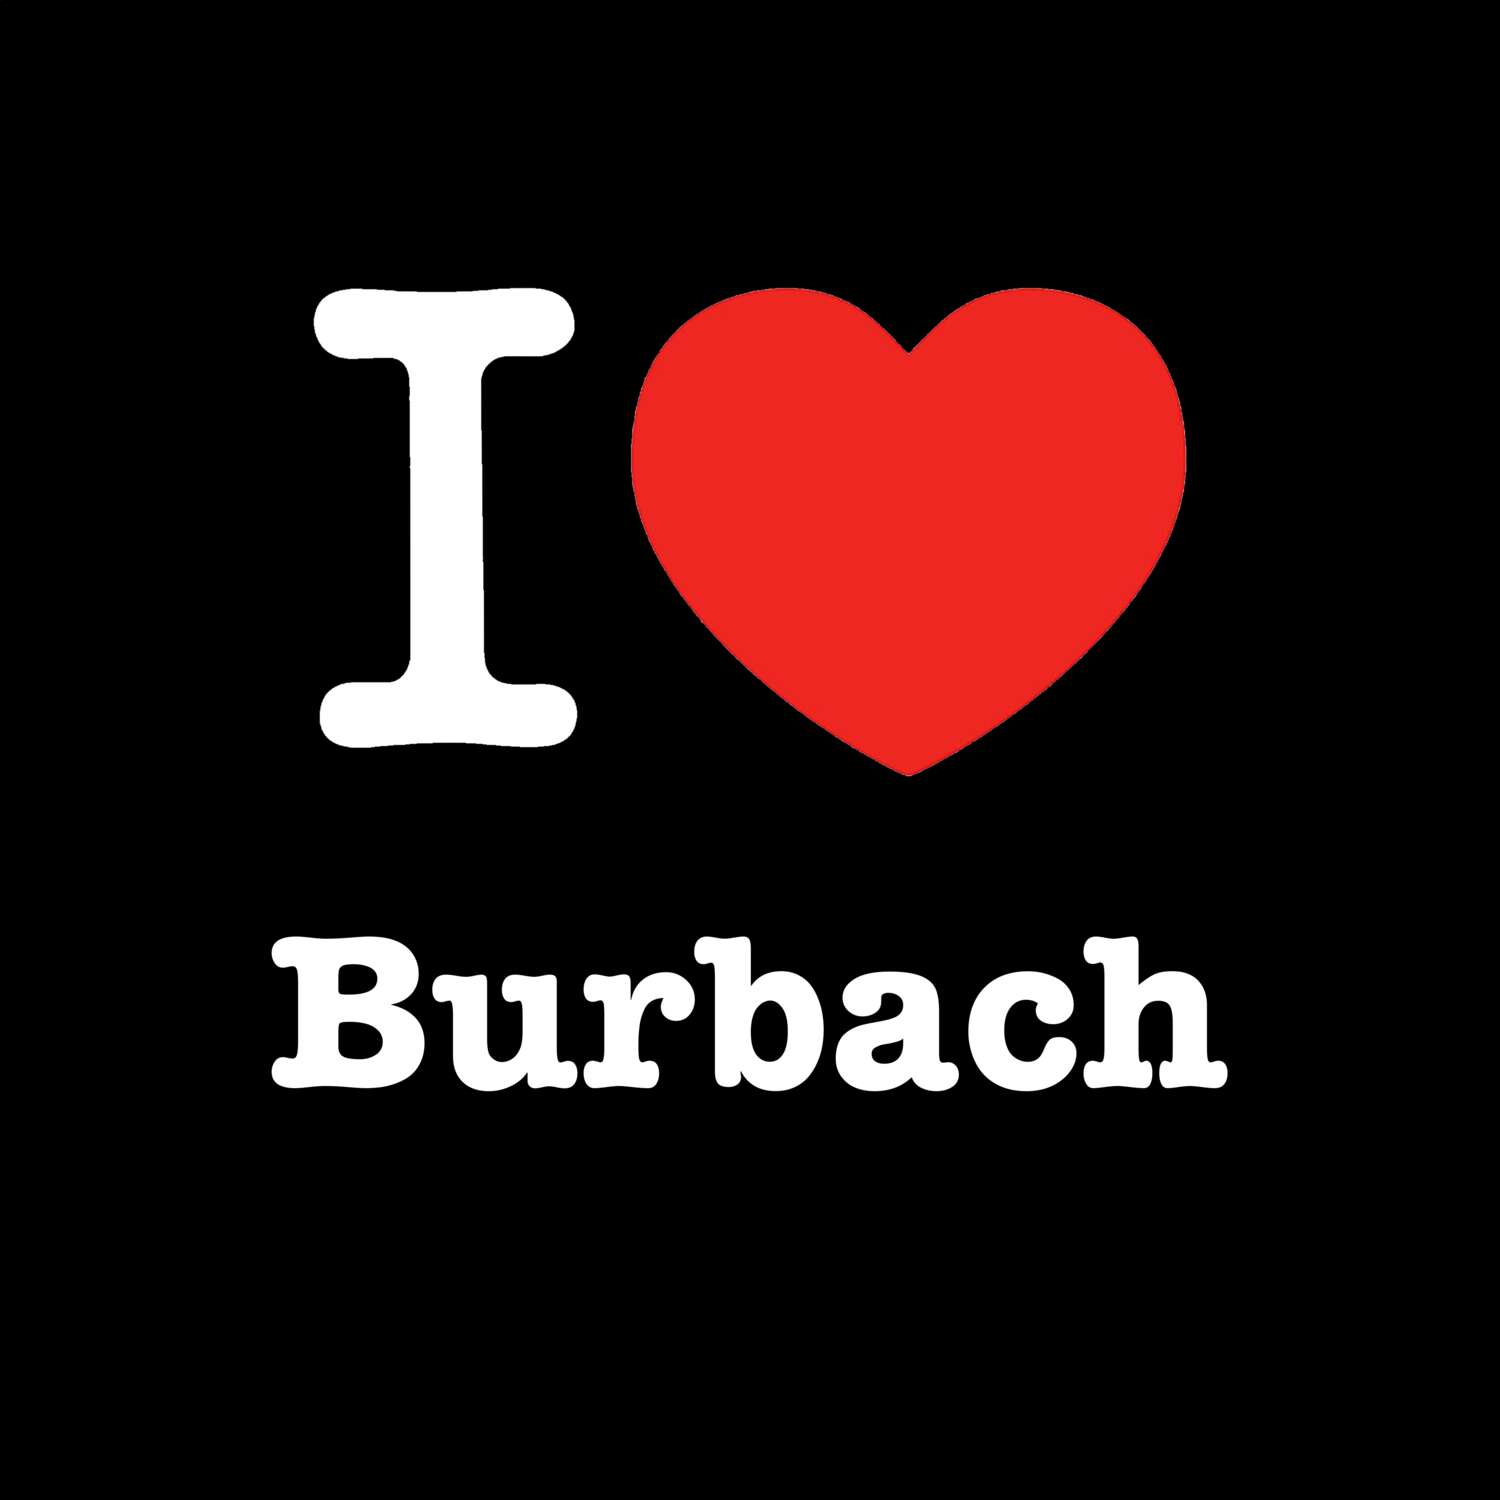 Burbach T-Shirt »I love«